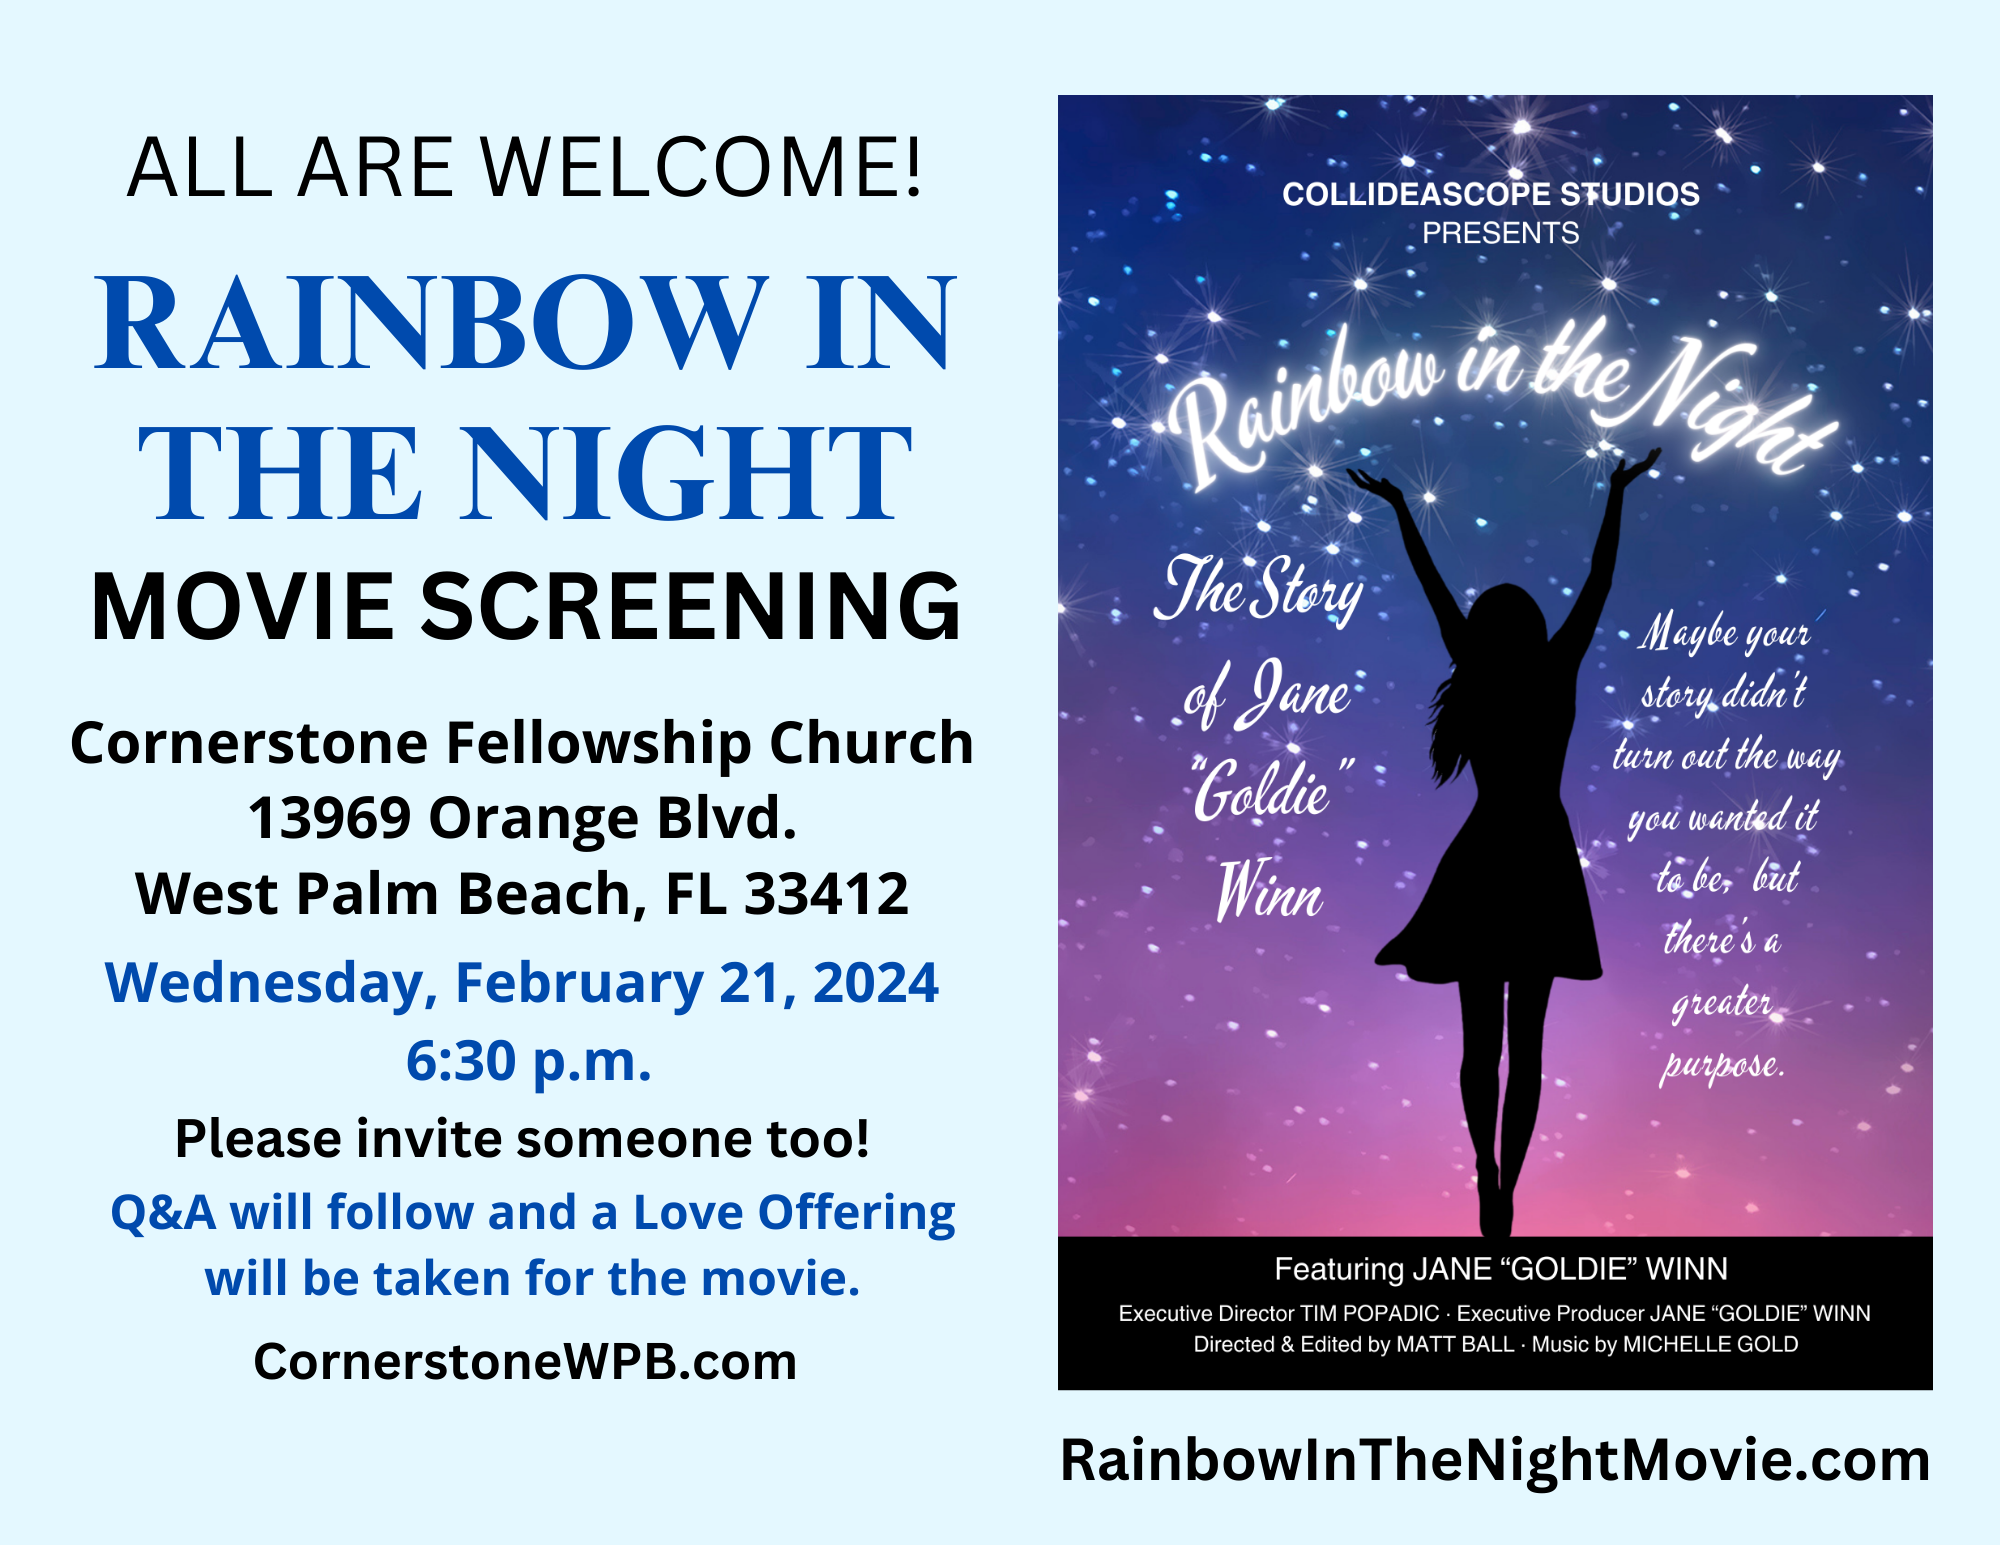 Rainbow in the Night Movie Screening Cornerstone Fellowship Church West Palm Beach FL